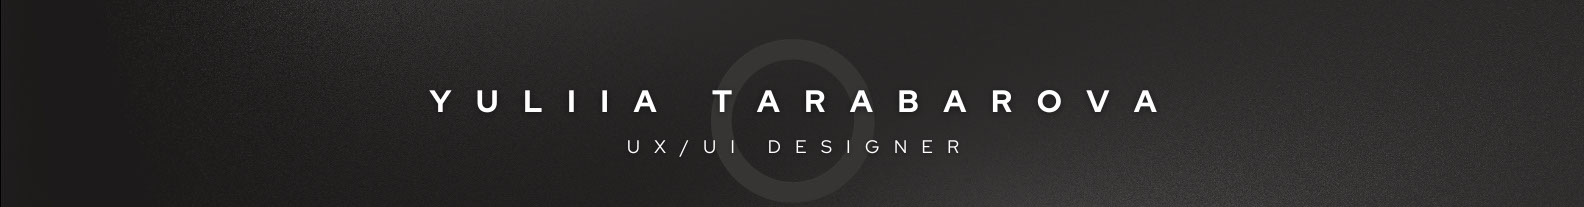 Yuliia Tarabarova's profile banner